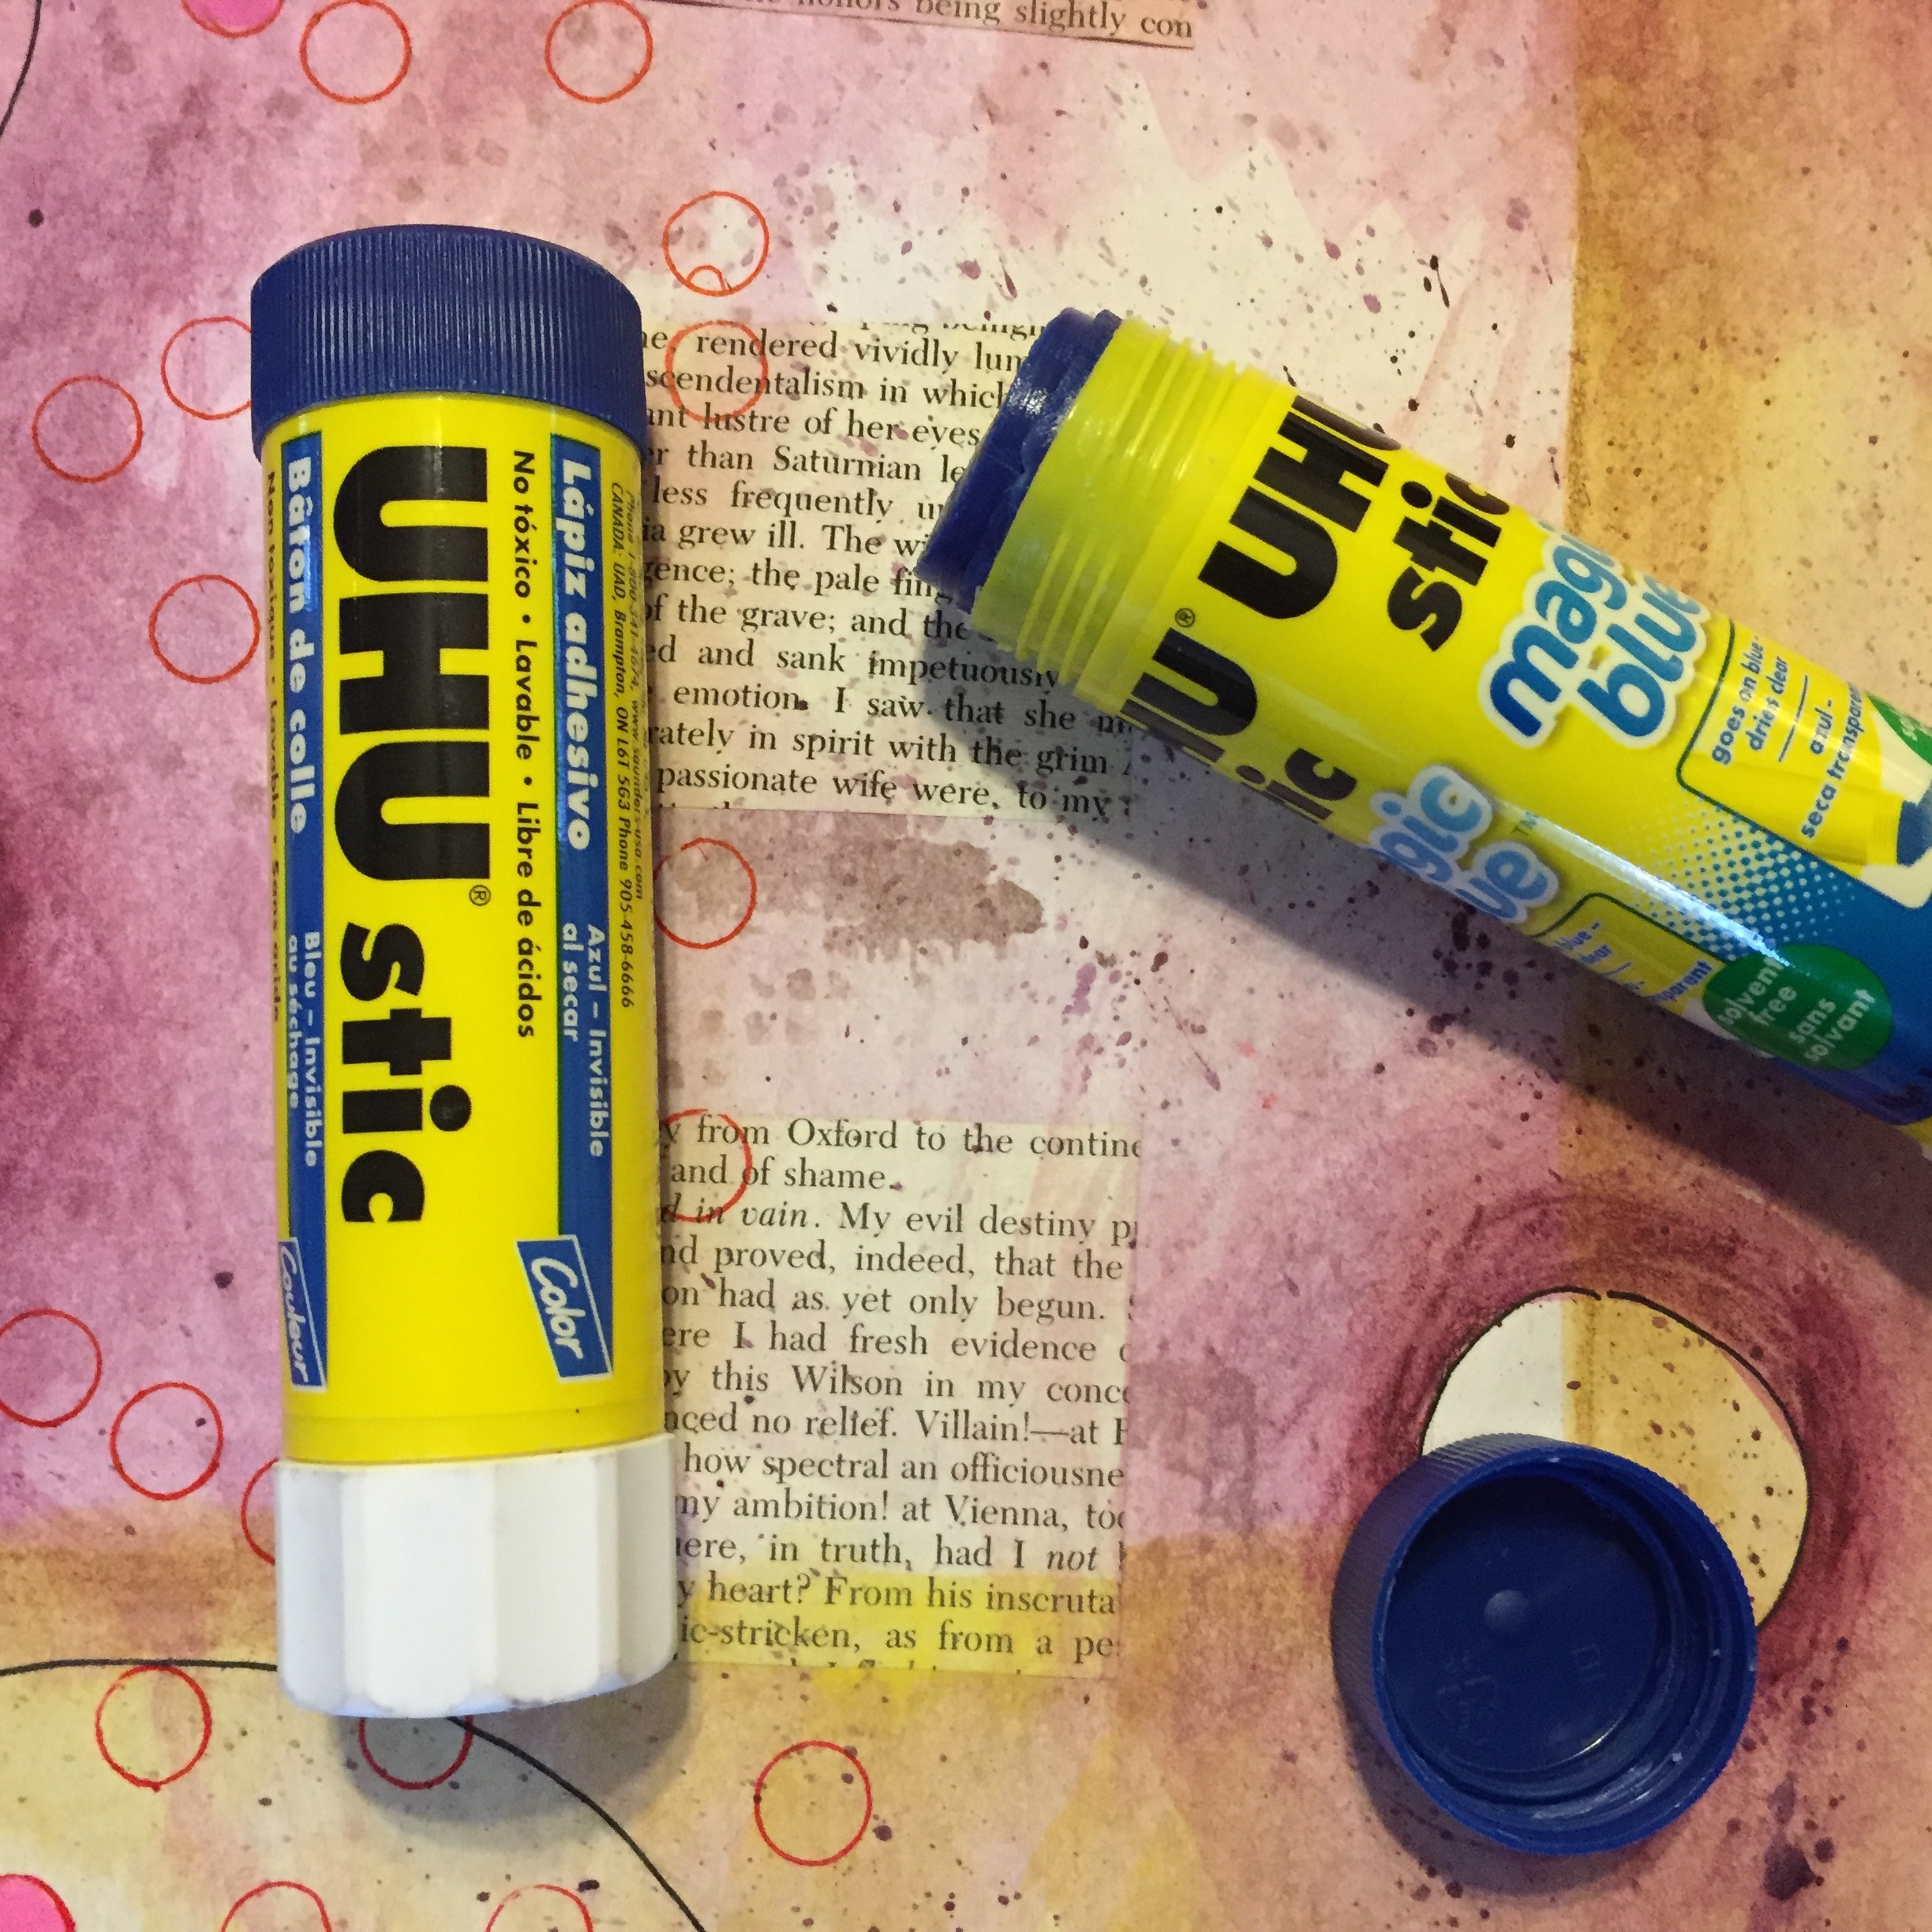 Materials Monday: UHU Stic Glue Stick — Eric Scott Art Studio